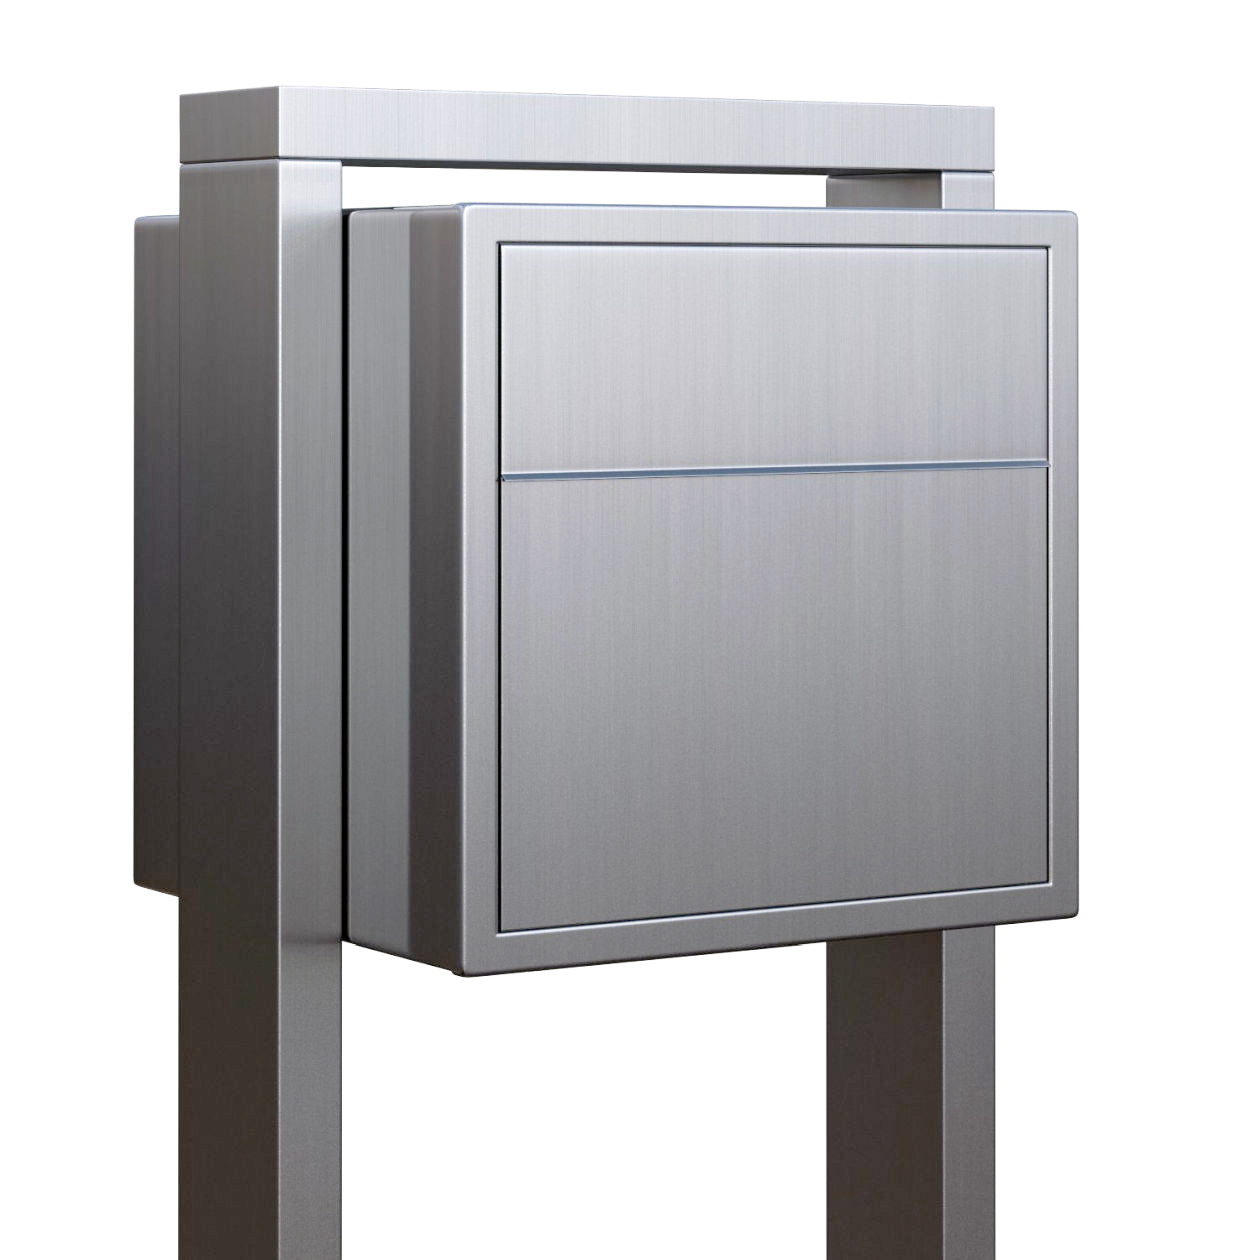 BURG 1 Standalone - Post-mounted locking stainless steel mailbox